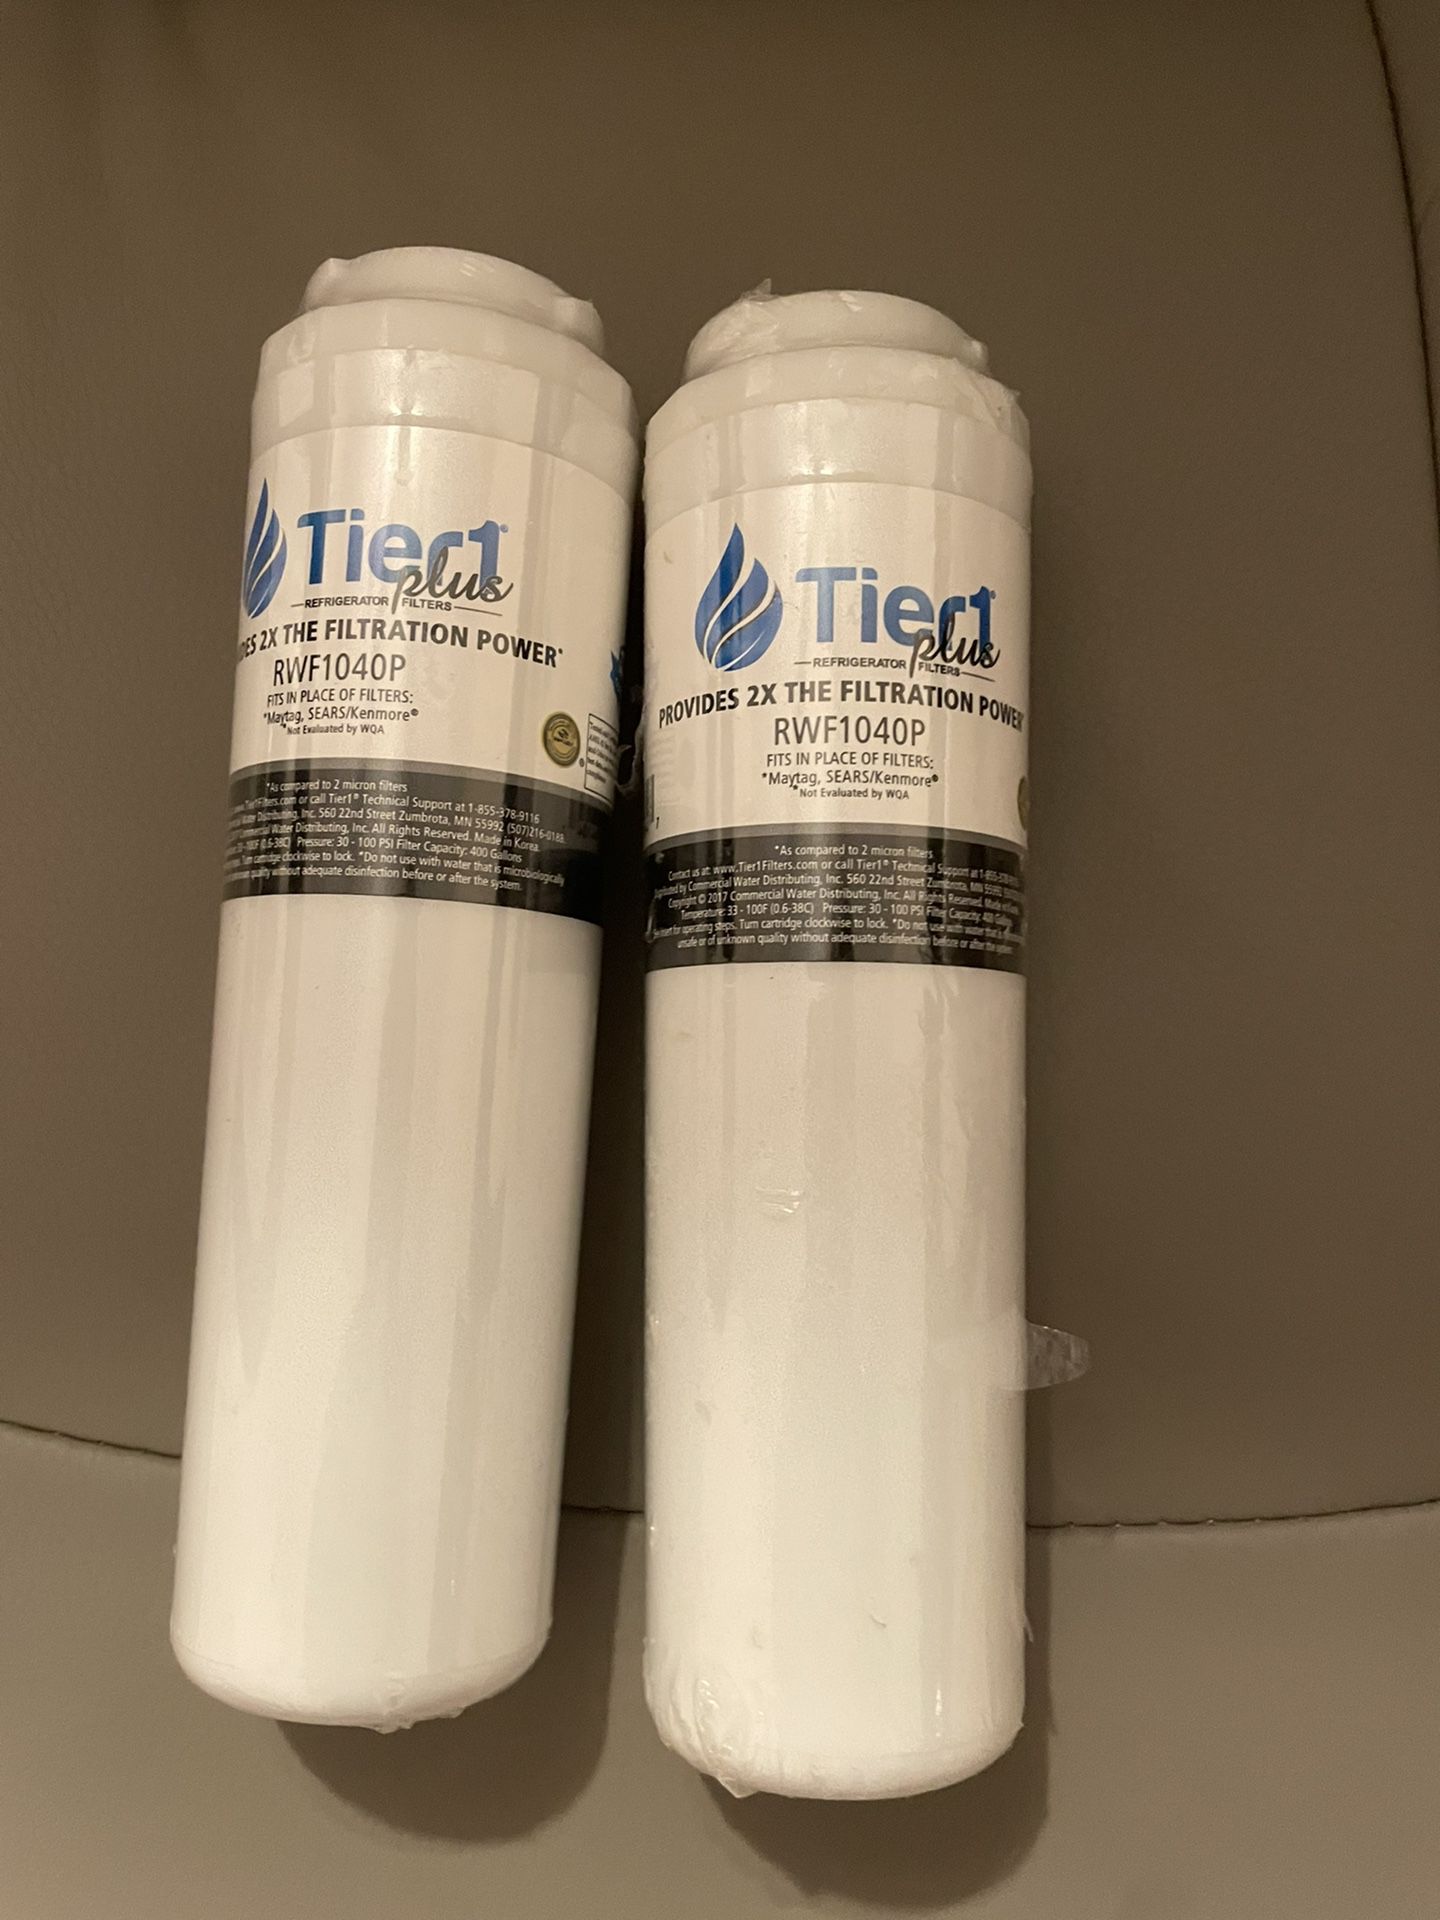 2 Tier1 Plus Water Filter For Refrigerators REF1040P